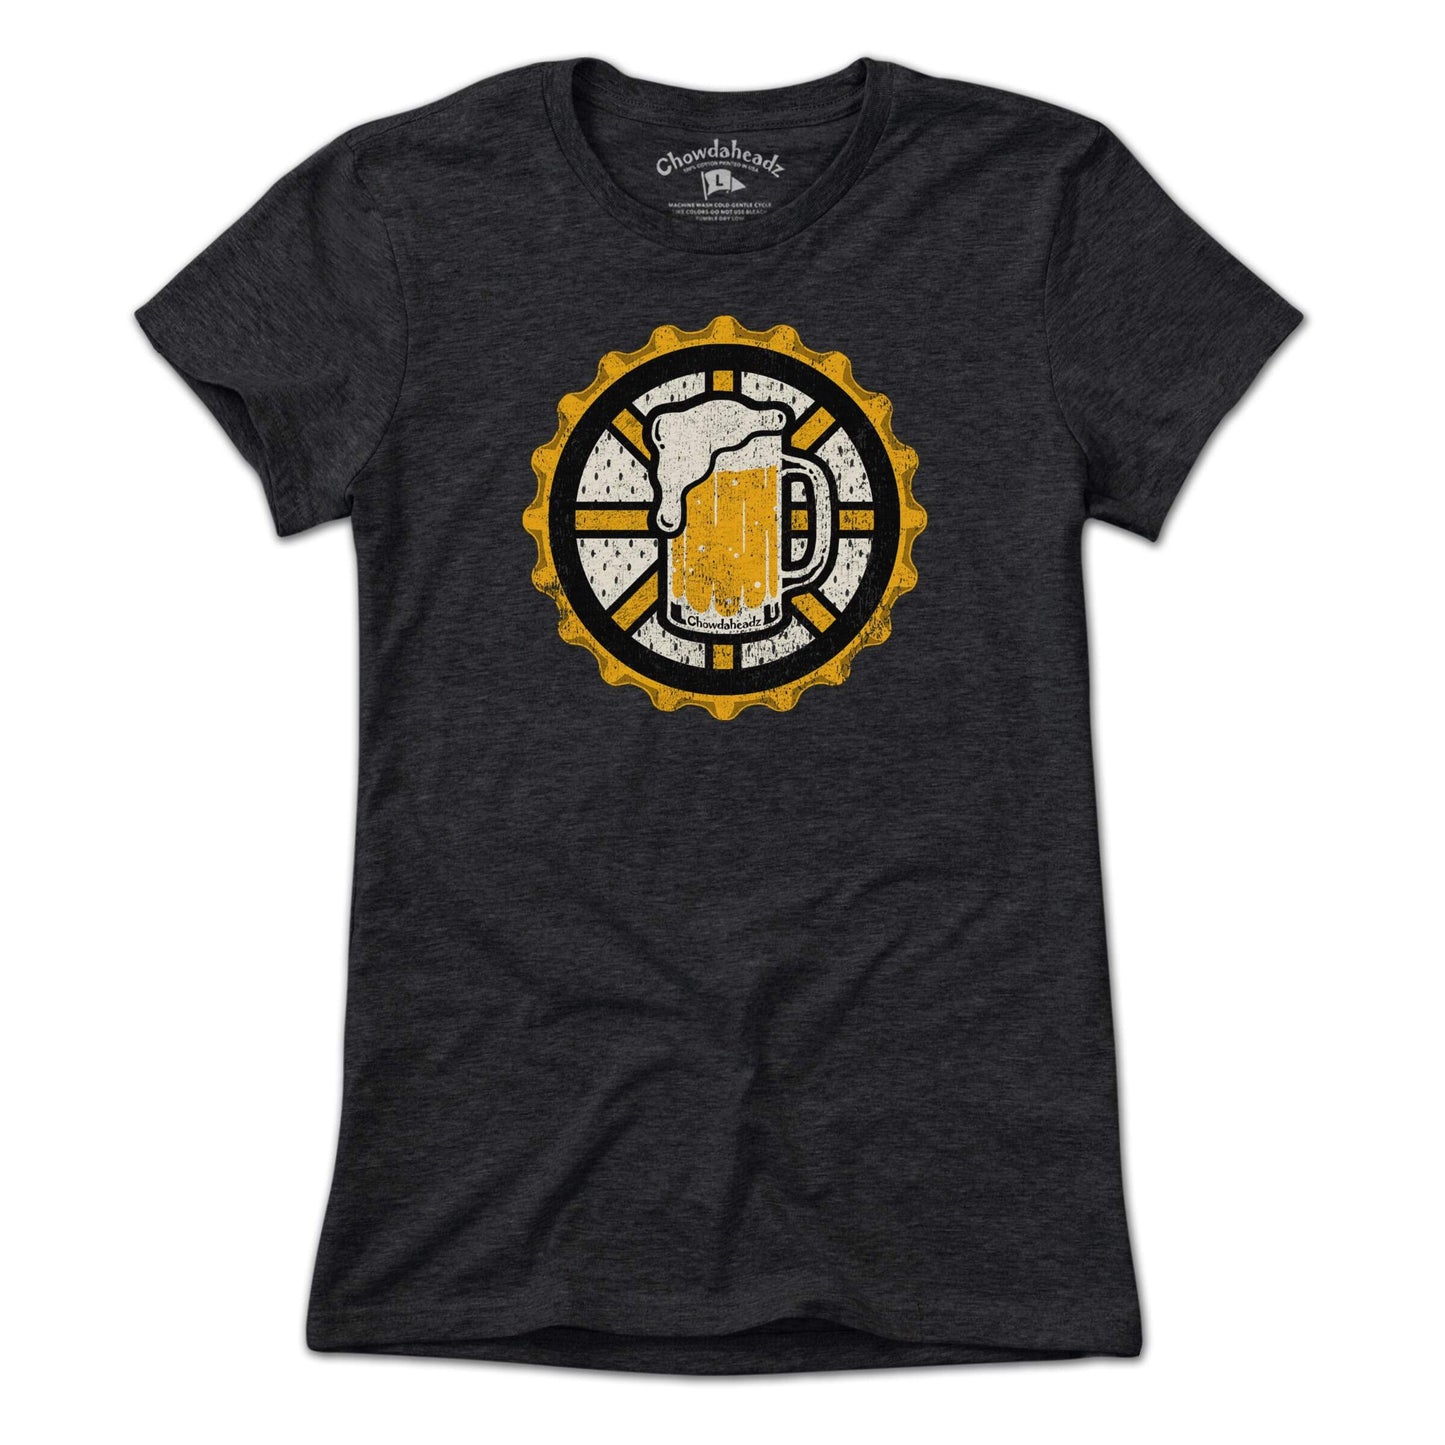 Boston's Brewin' T-Shirt - Chowdaheadz